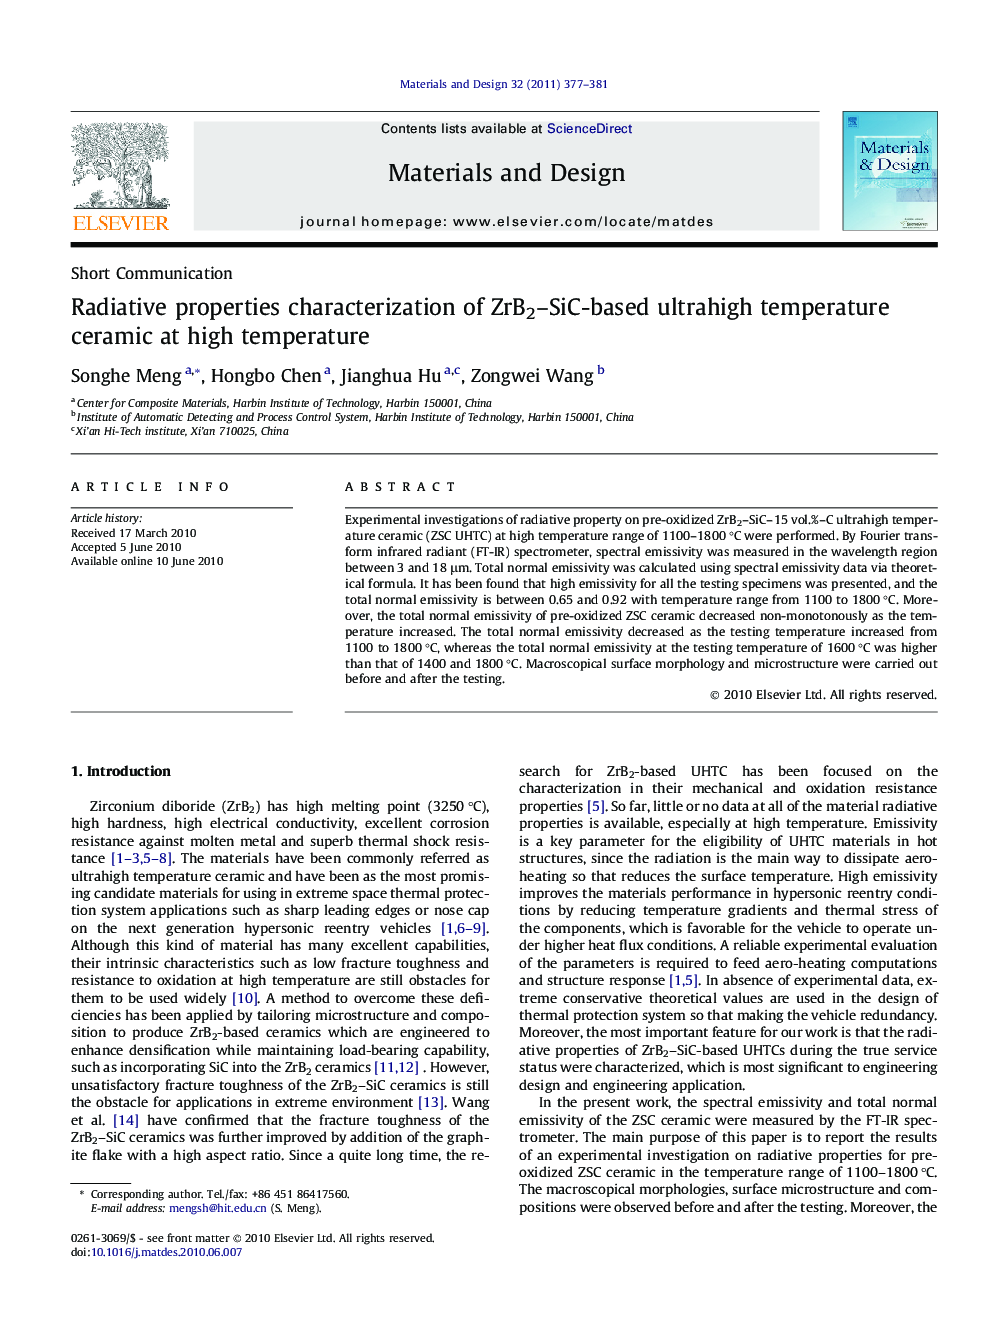 Radiative properties characterization of ZrB2–SiC-based ultrahigh temperature ceramic at high temperature